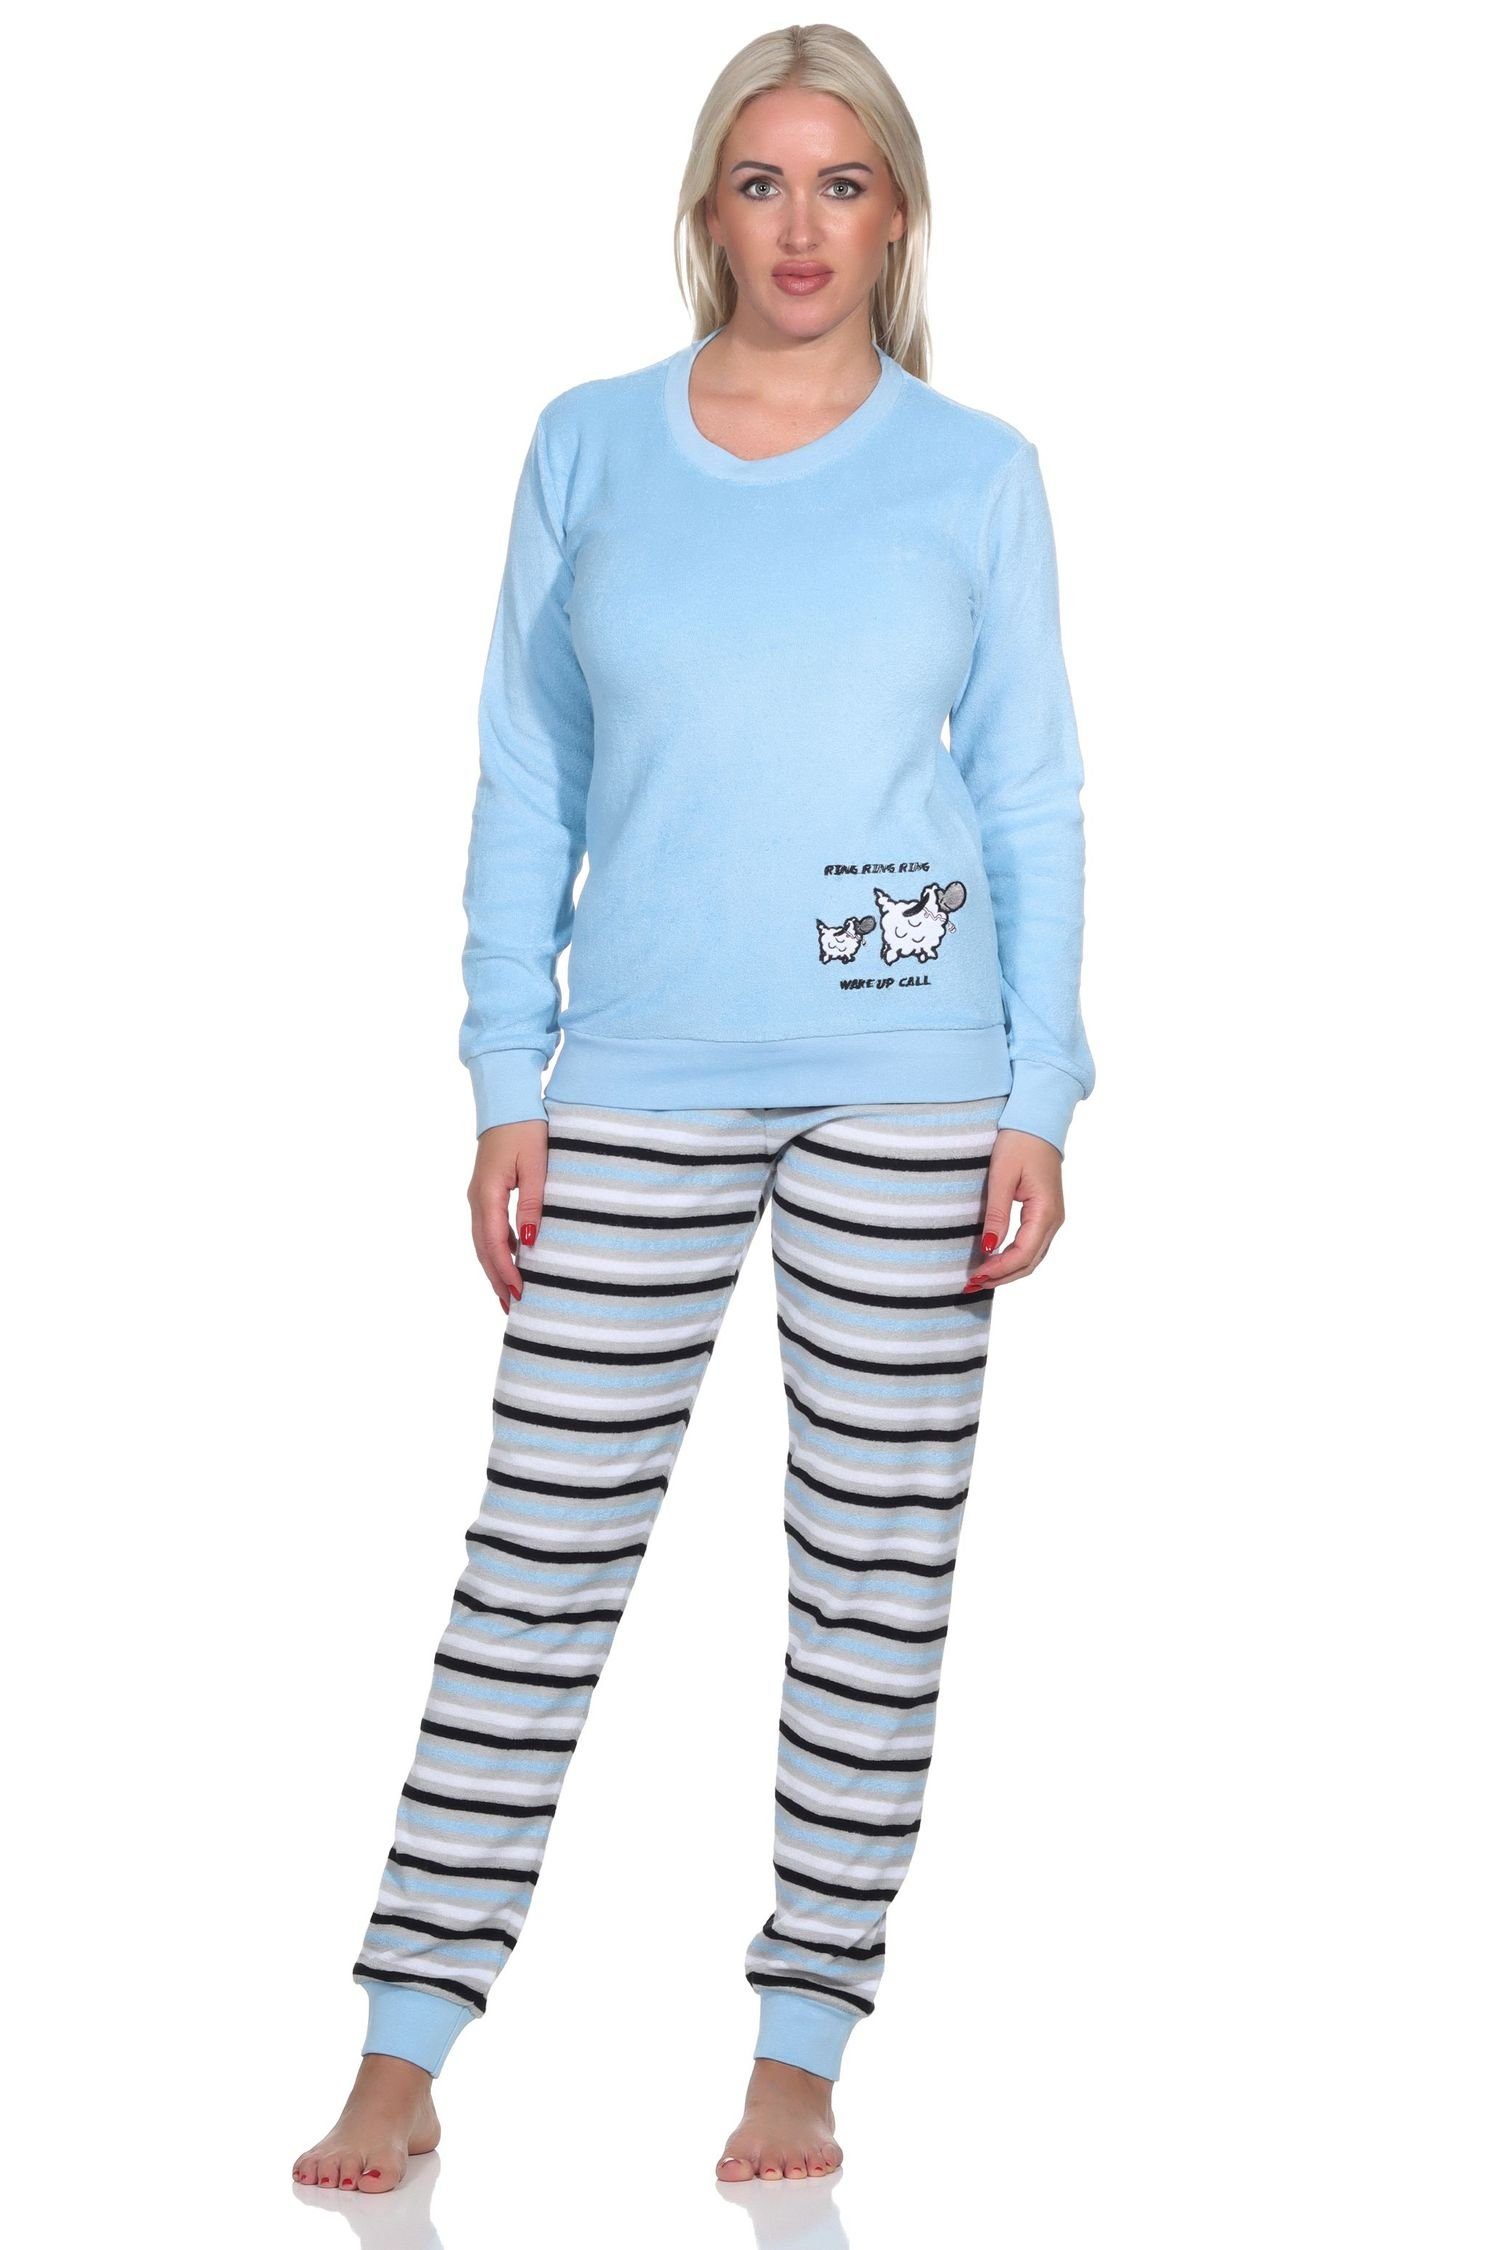 Damen Tiermotiv blau Hose Frottee Pyjama Oberteil süssen mit Pyjama, Normann gestreift,